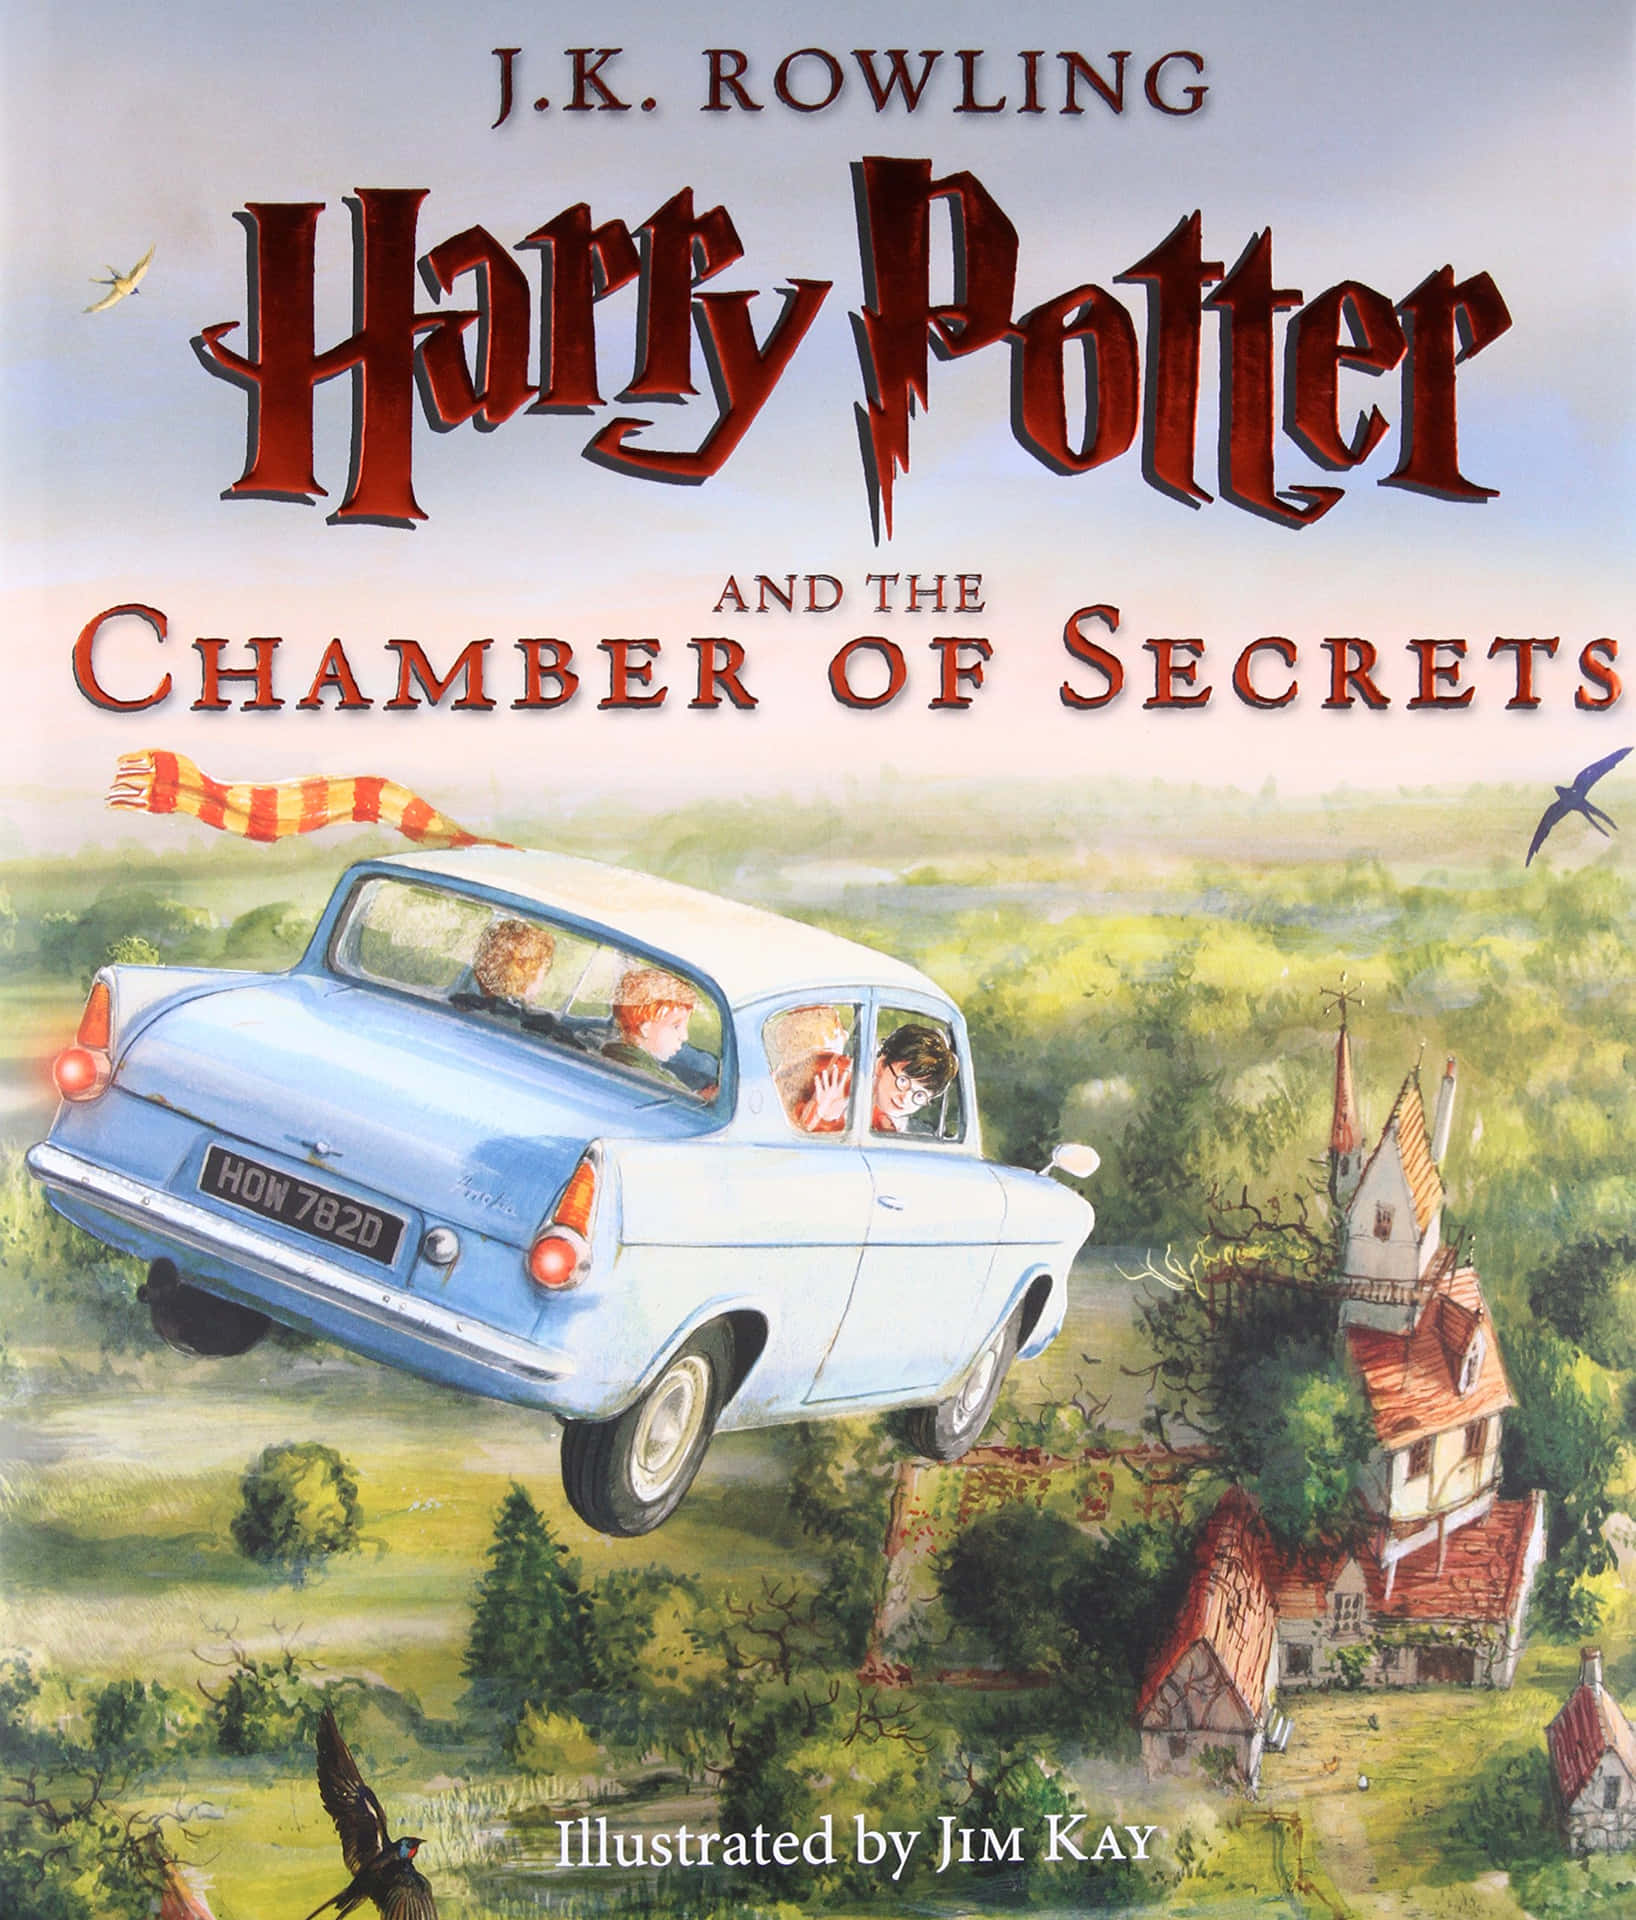 "The Magical Chamber of Secrets" Wallpaper